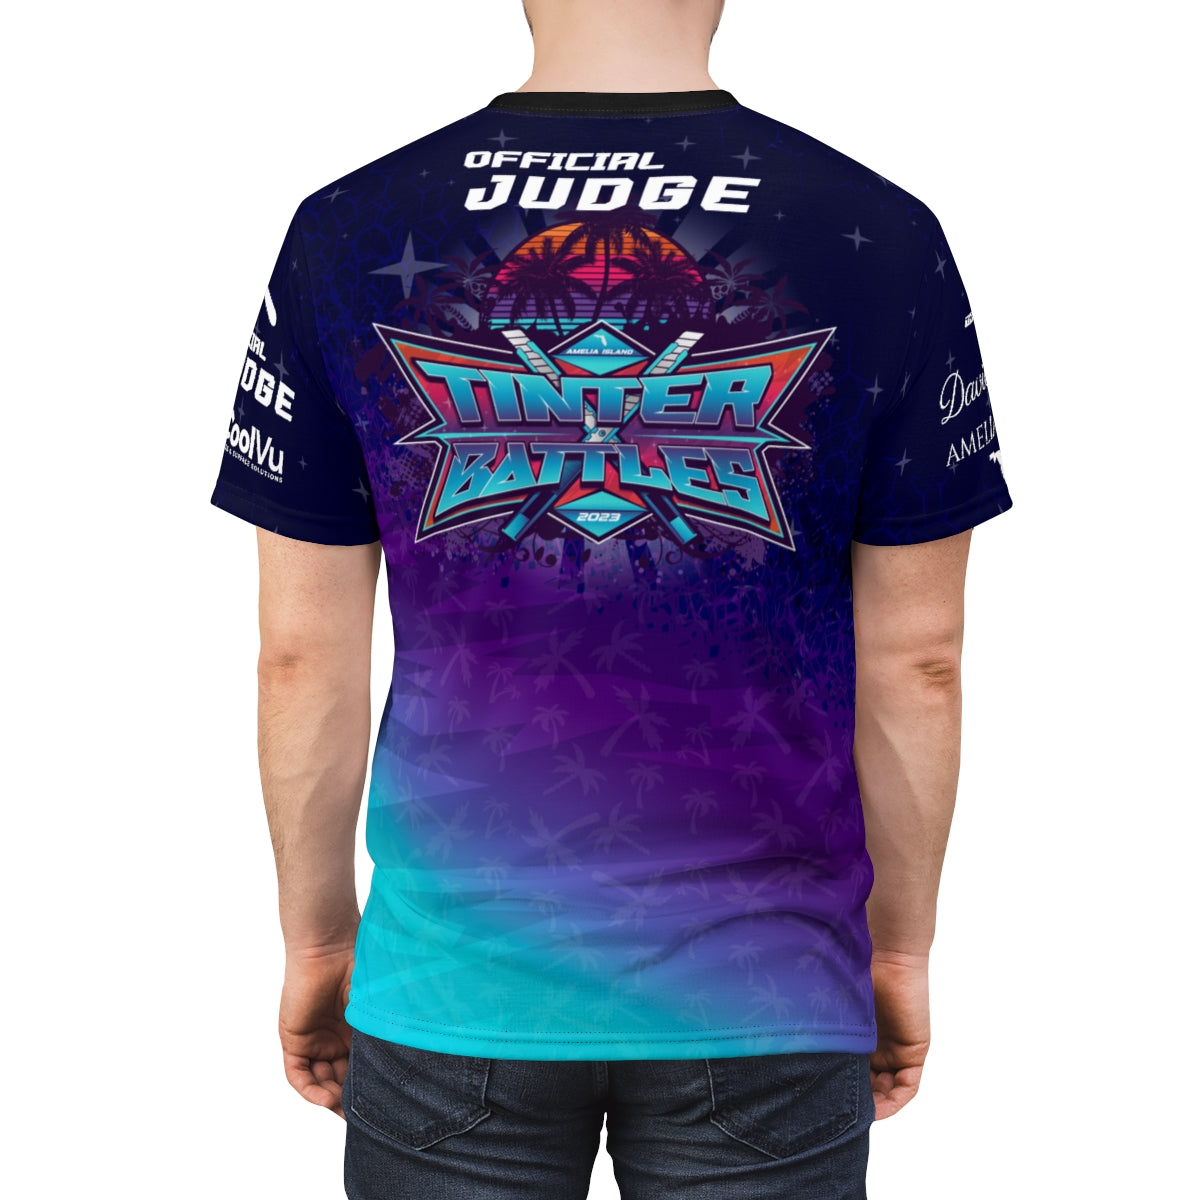 David Karle TB23 Official Judges Shirt